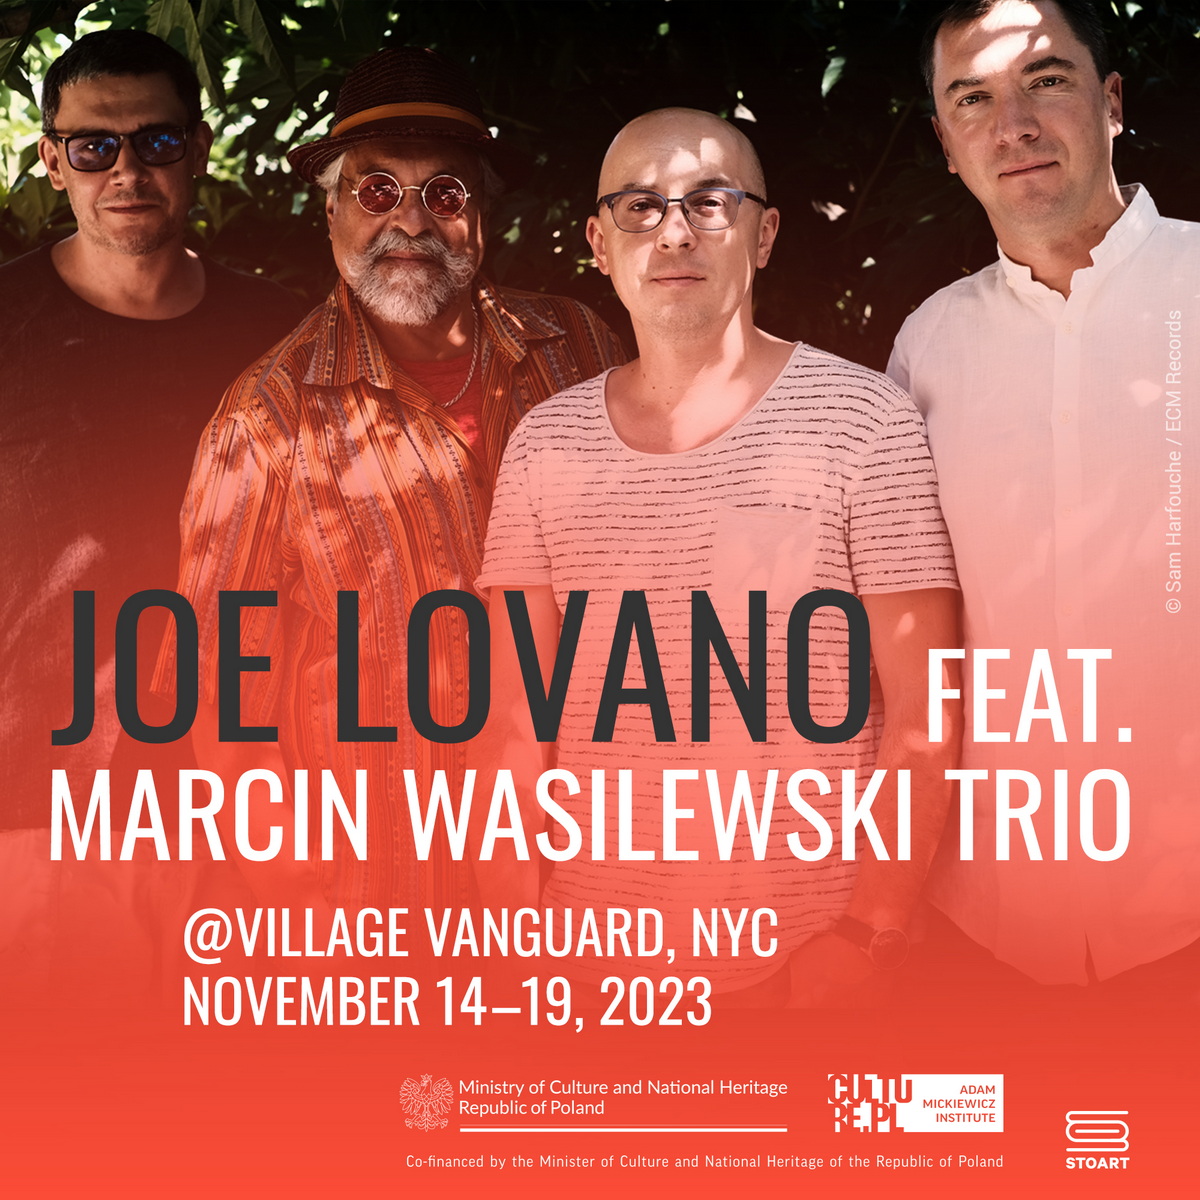 Marcin Wasilewski Trio zagra w klubie Village Vanguard